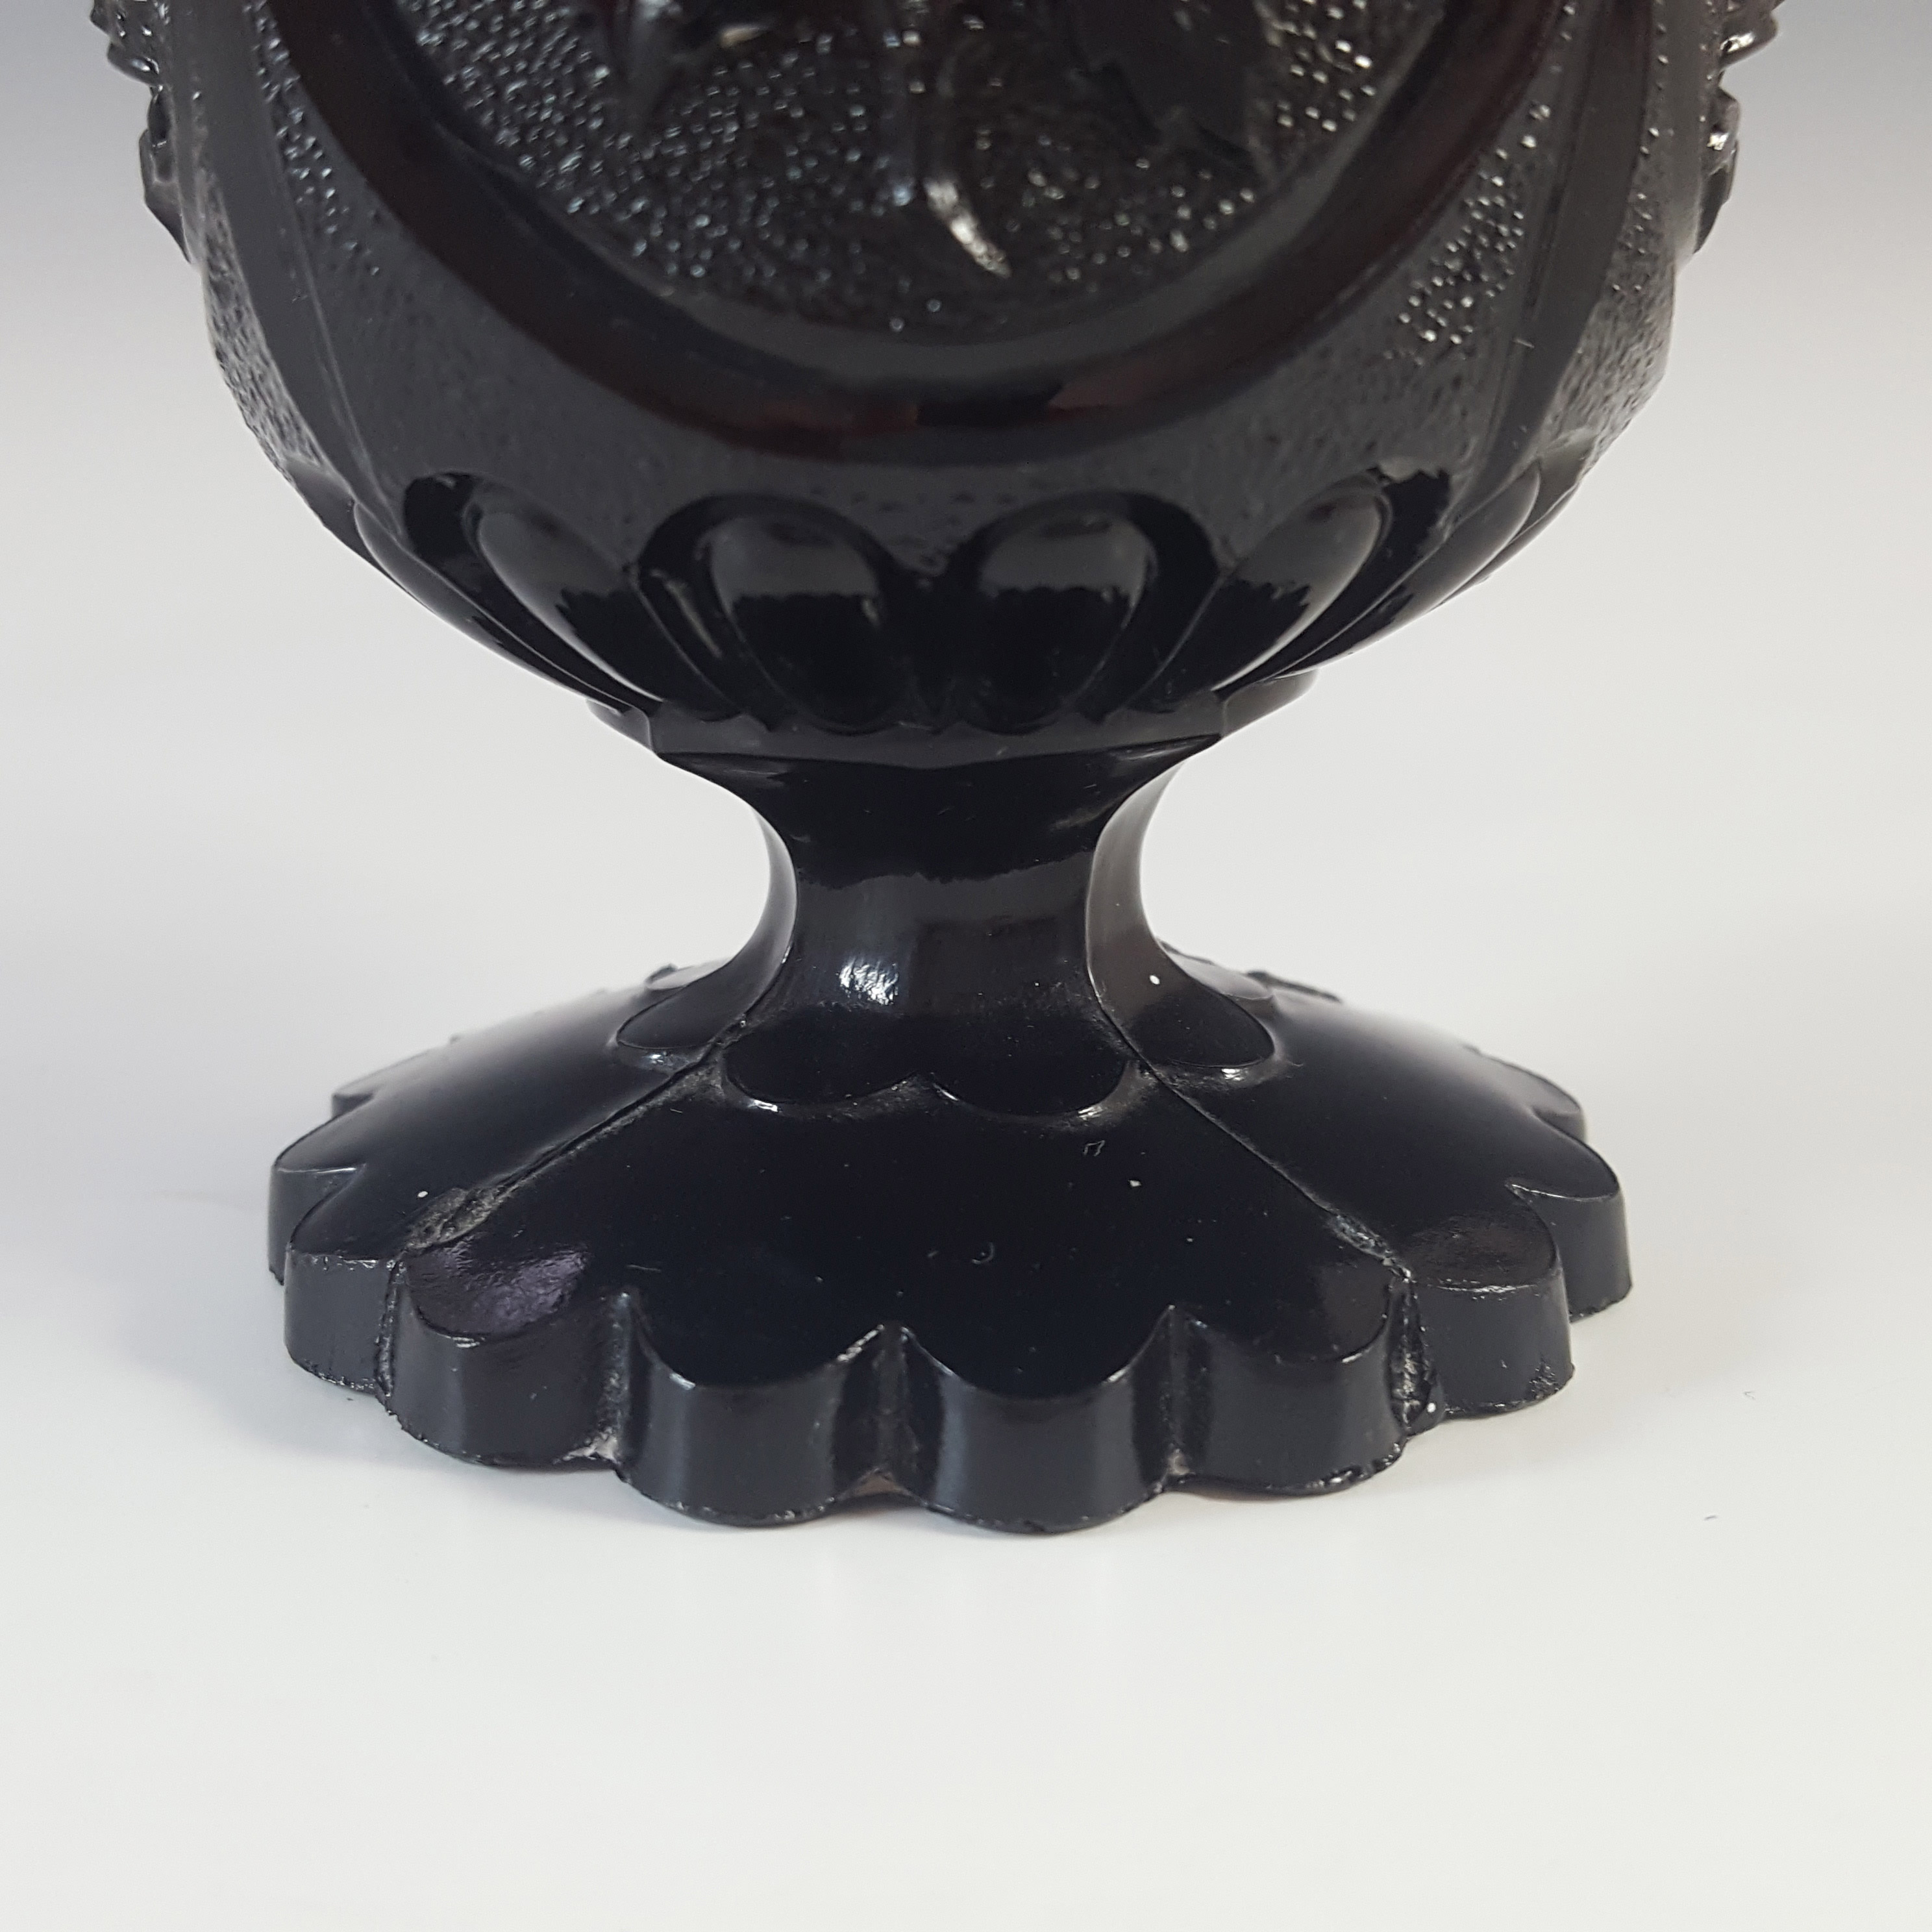 Victorian Black Milk Glass Vitro-Porcelain Creamer / Jug - Click Image to Close